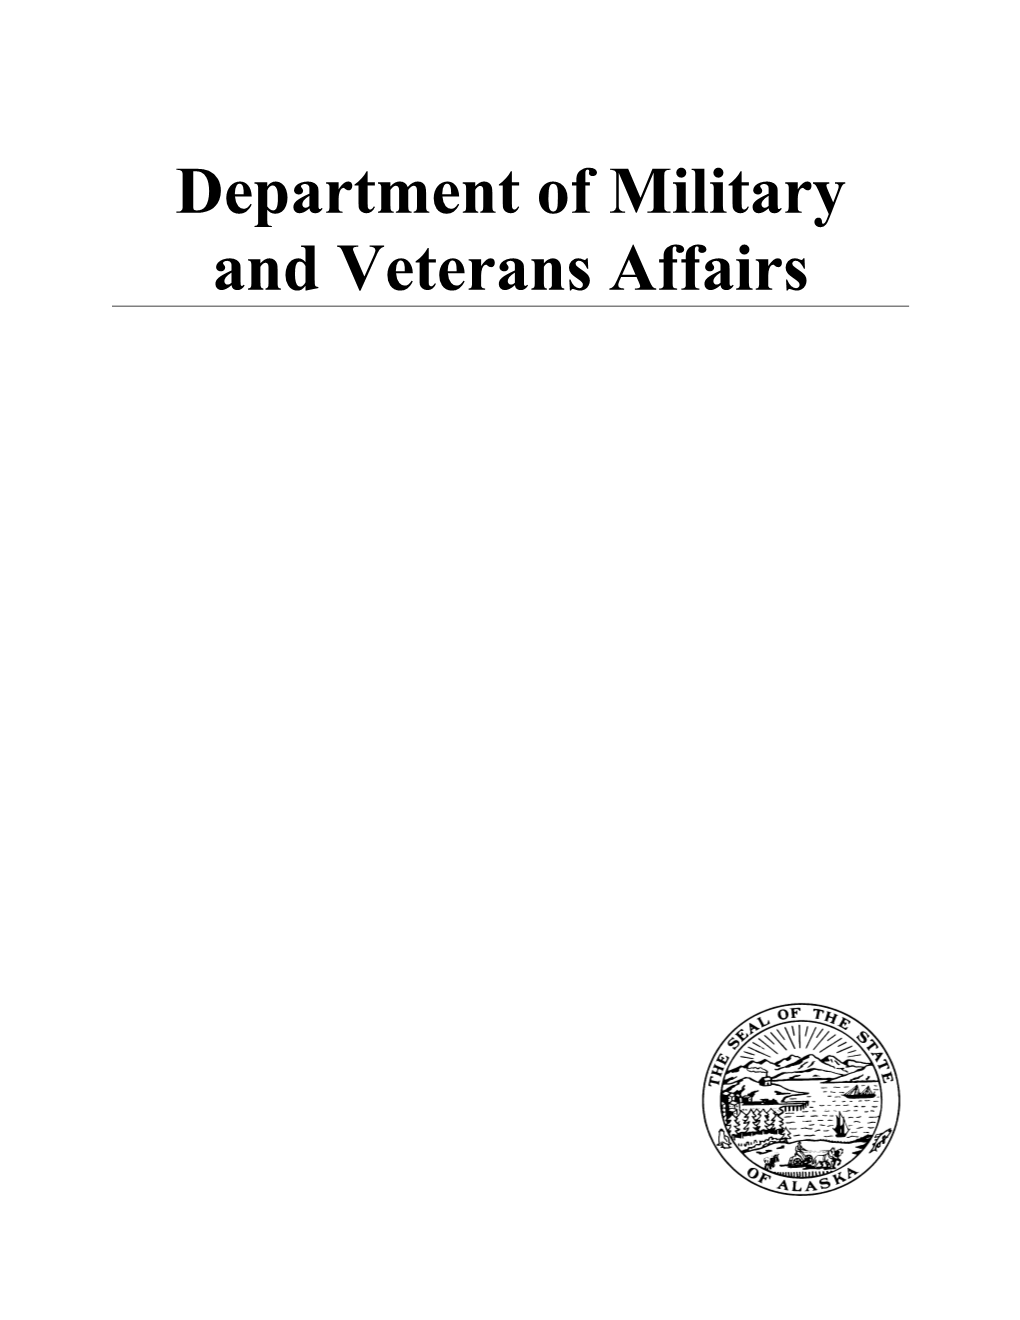 Dept of Military & Veterans Affairs